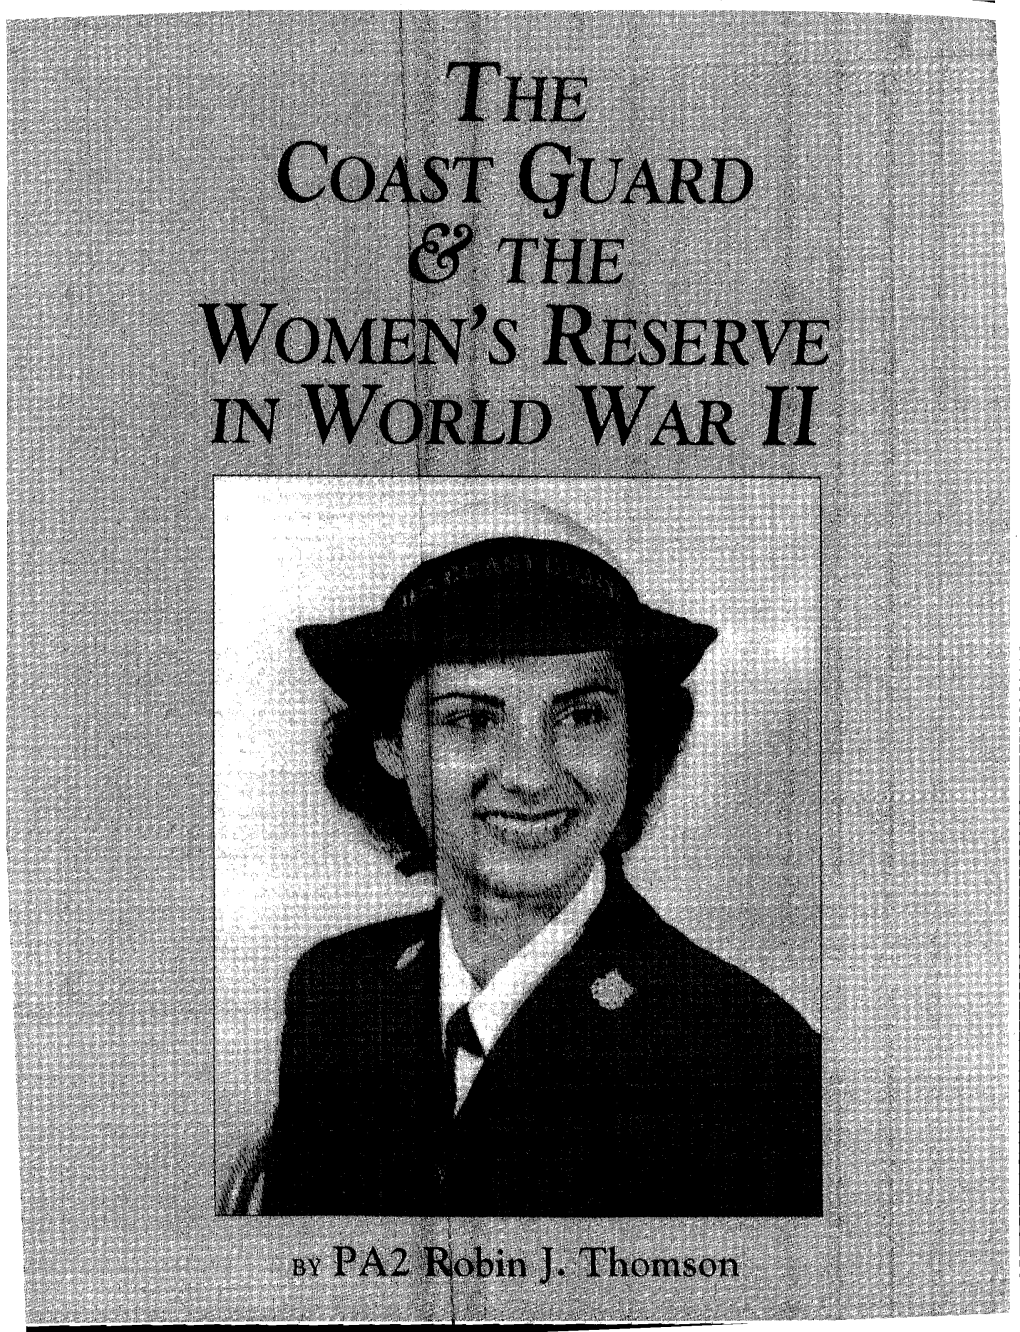 The Coast Guard & the Women's Reserve in World War II